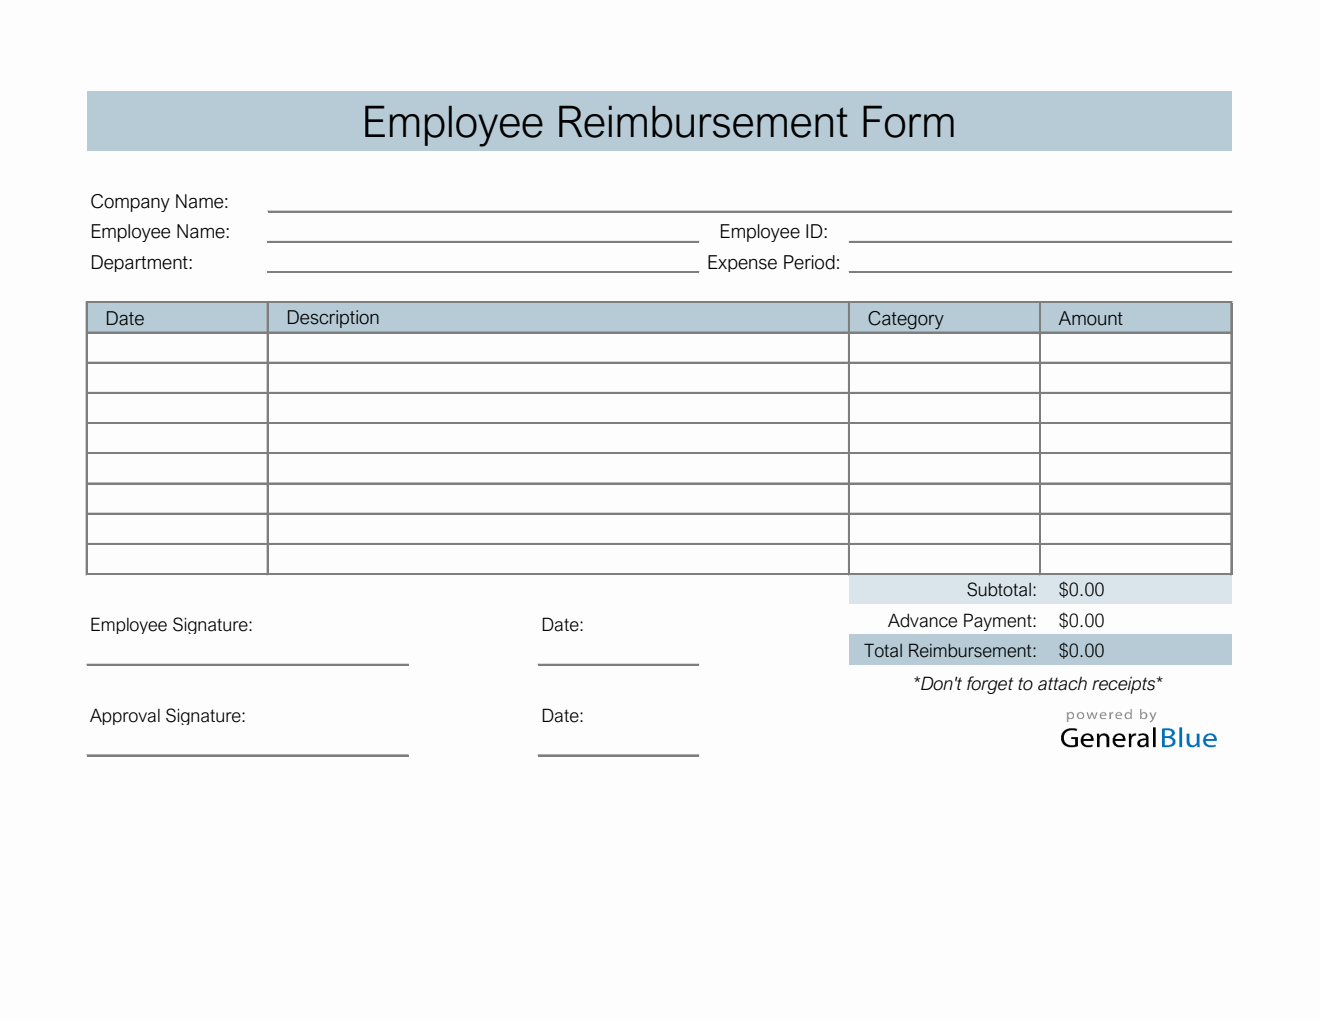 Employee Reimbursement Form in Excel (Basic)